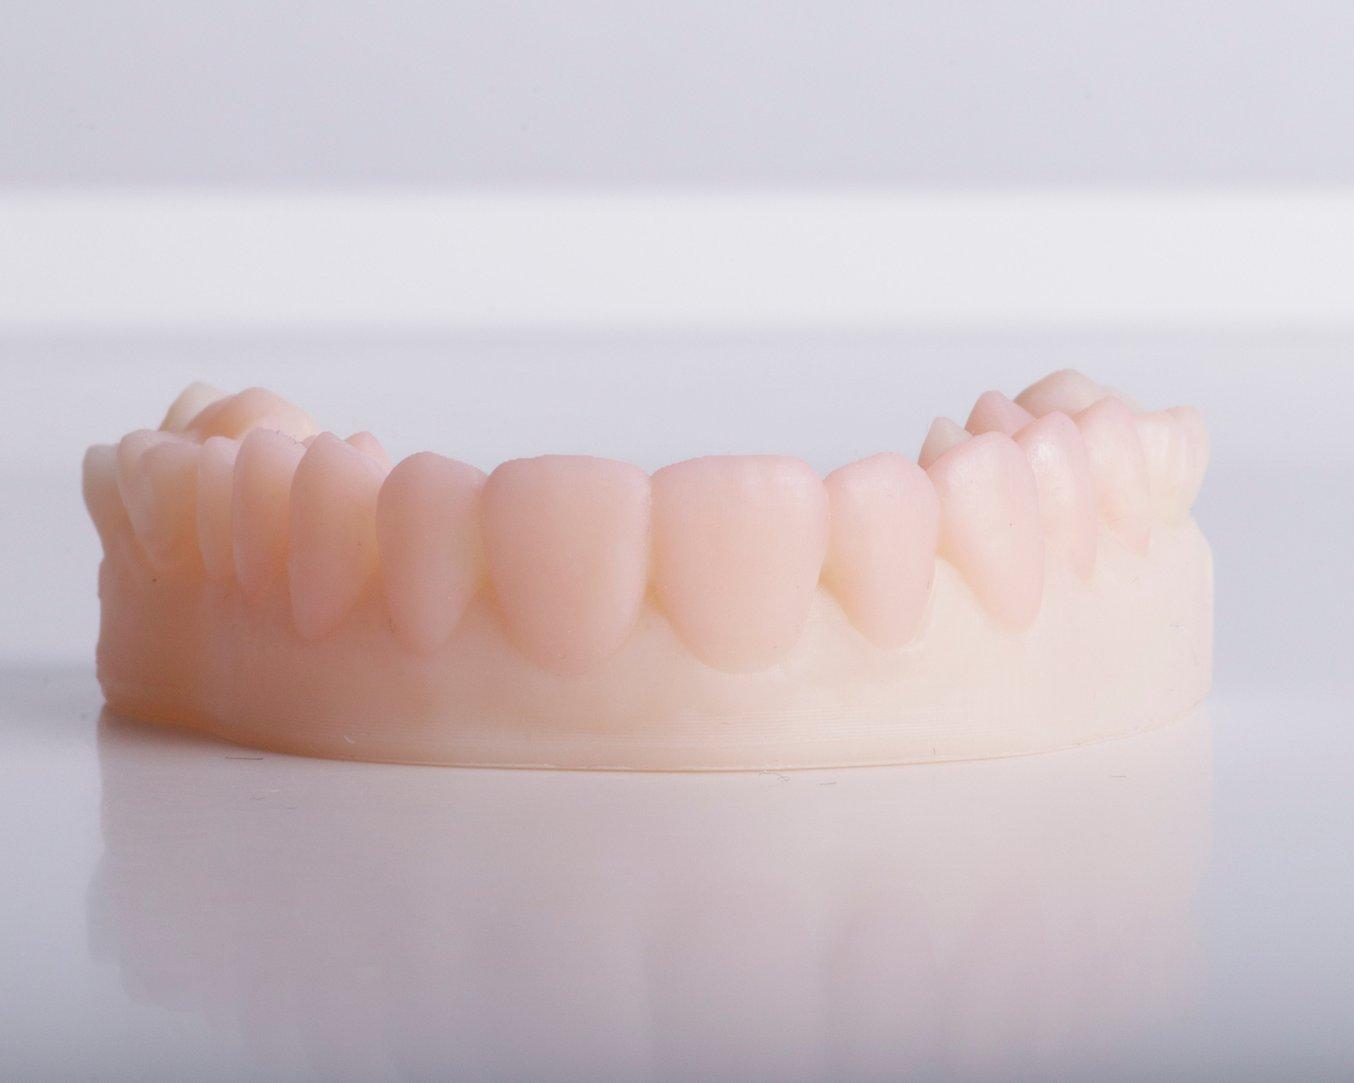 dental model 3d-printed with Model resin